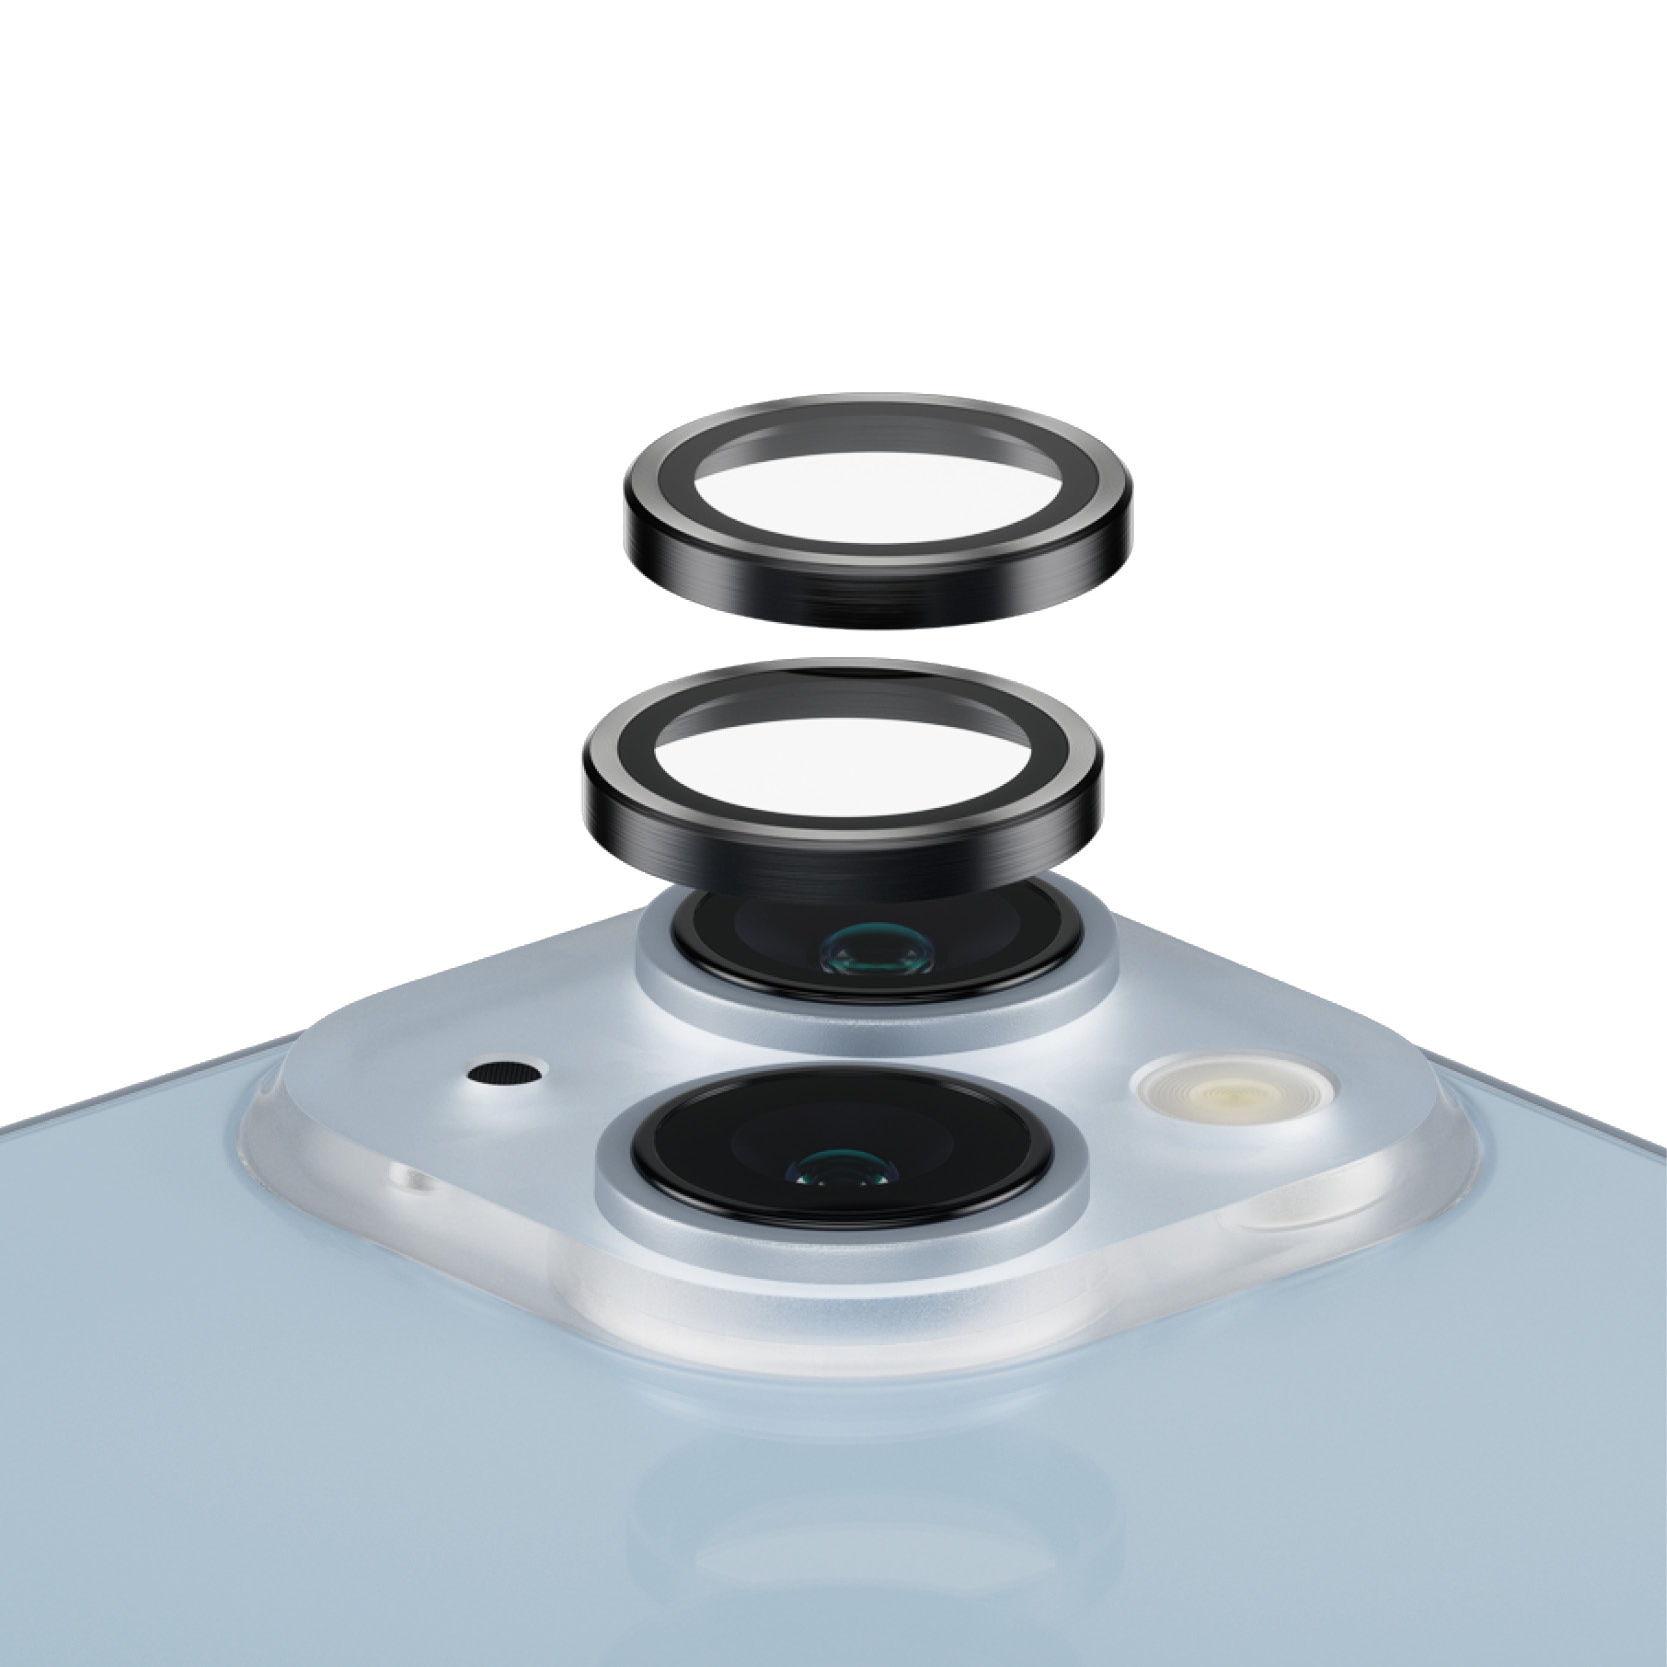 iPhone 14 Hoops Camera Lens Protector, Black